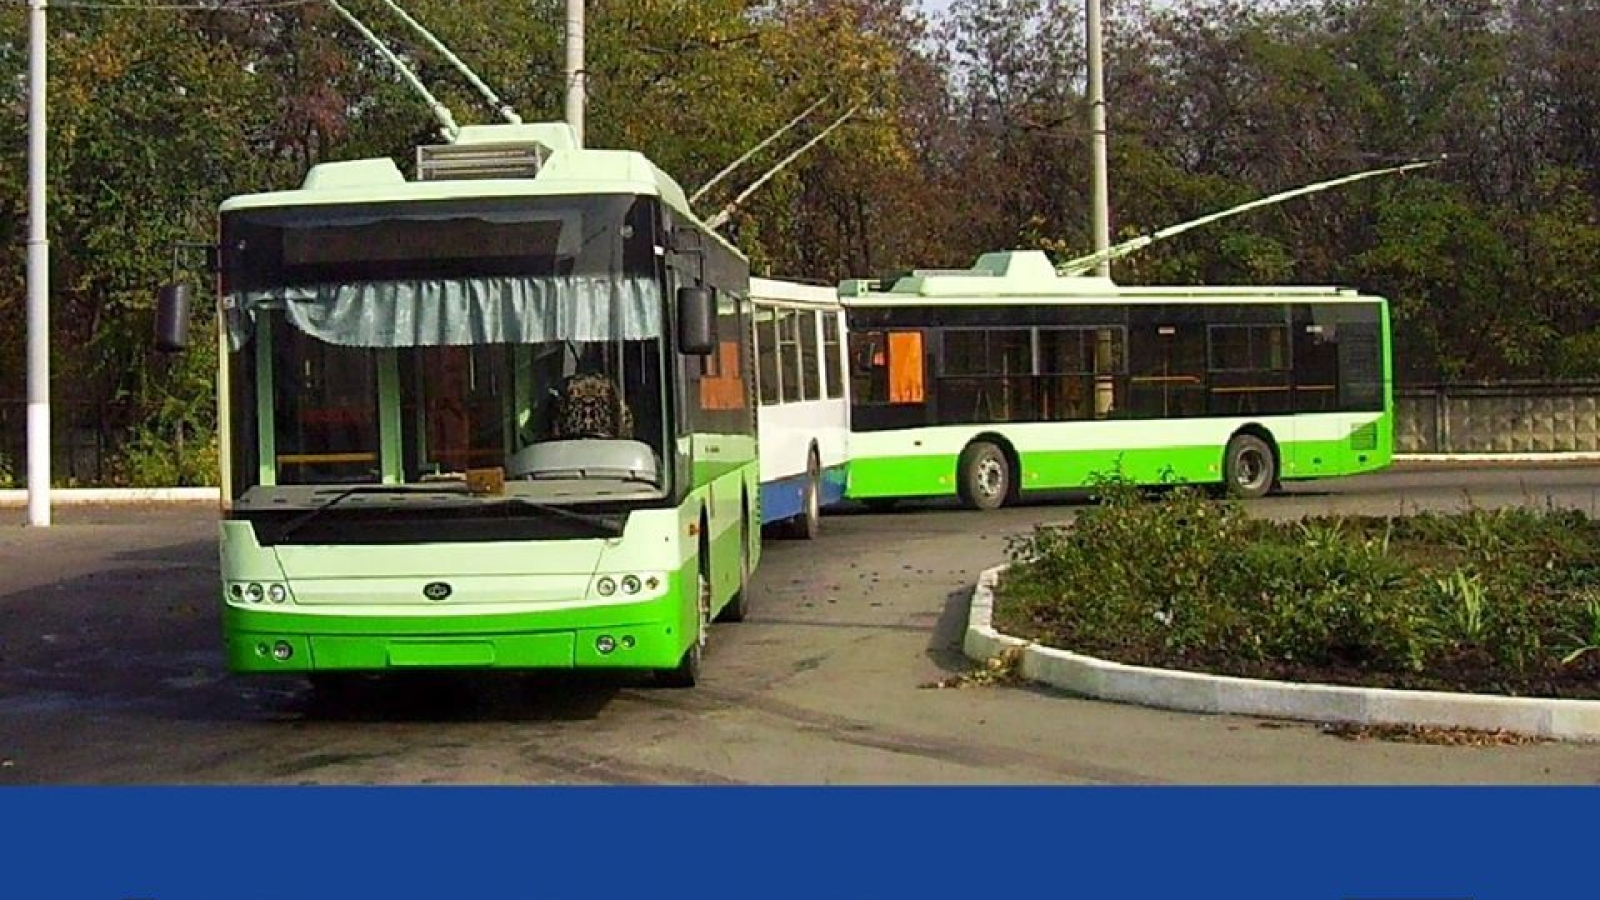 Ukraine: City of Kharkiv to buy 49 energy-efficient trolleybuses with EU help